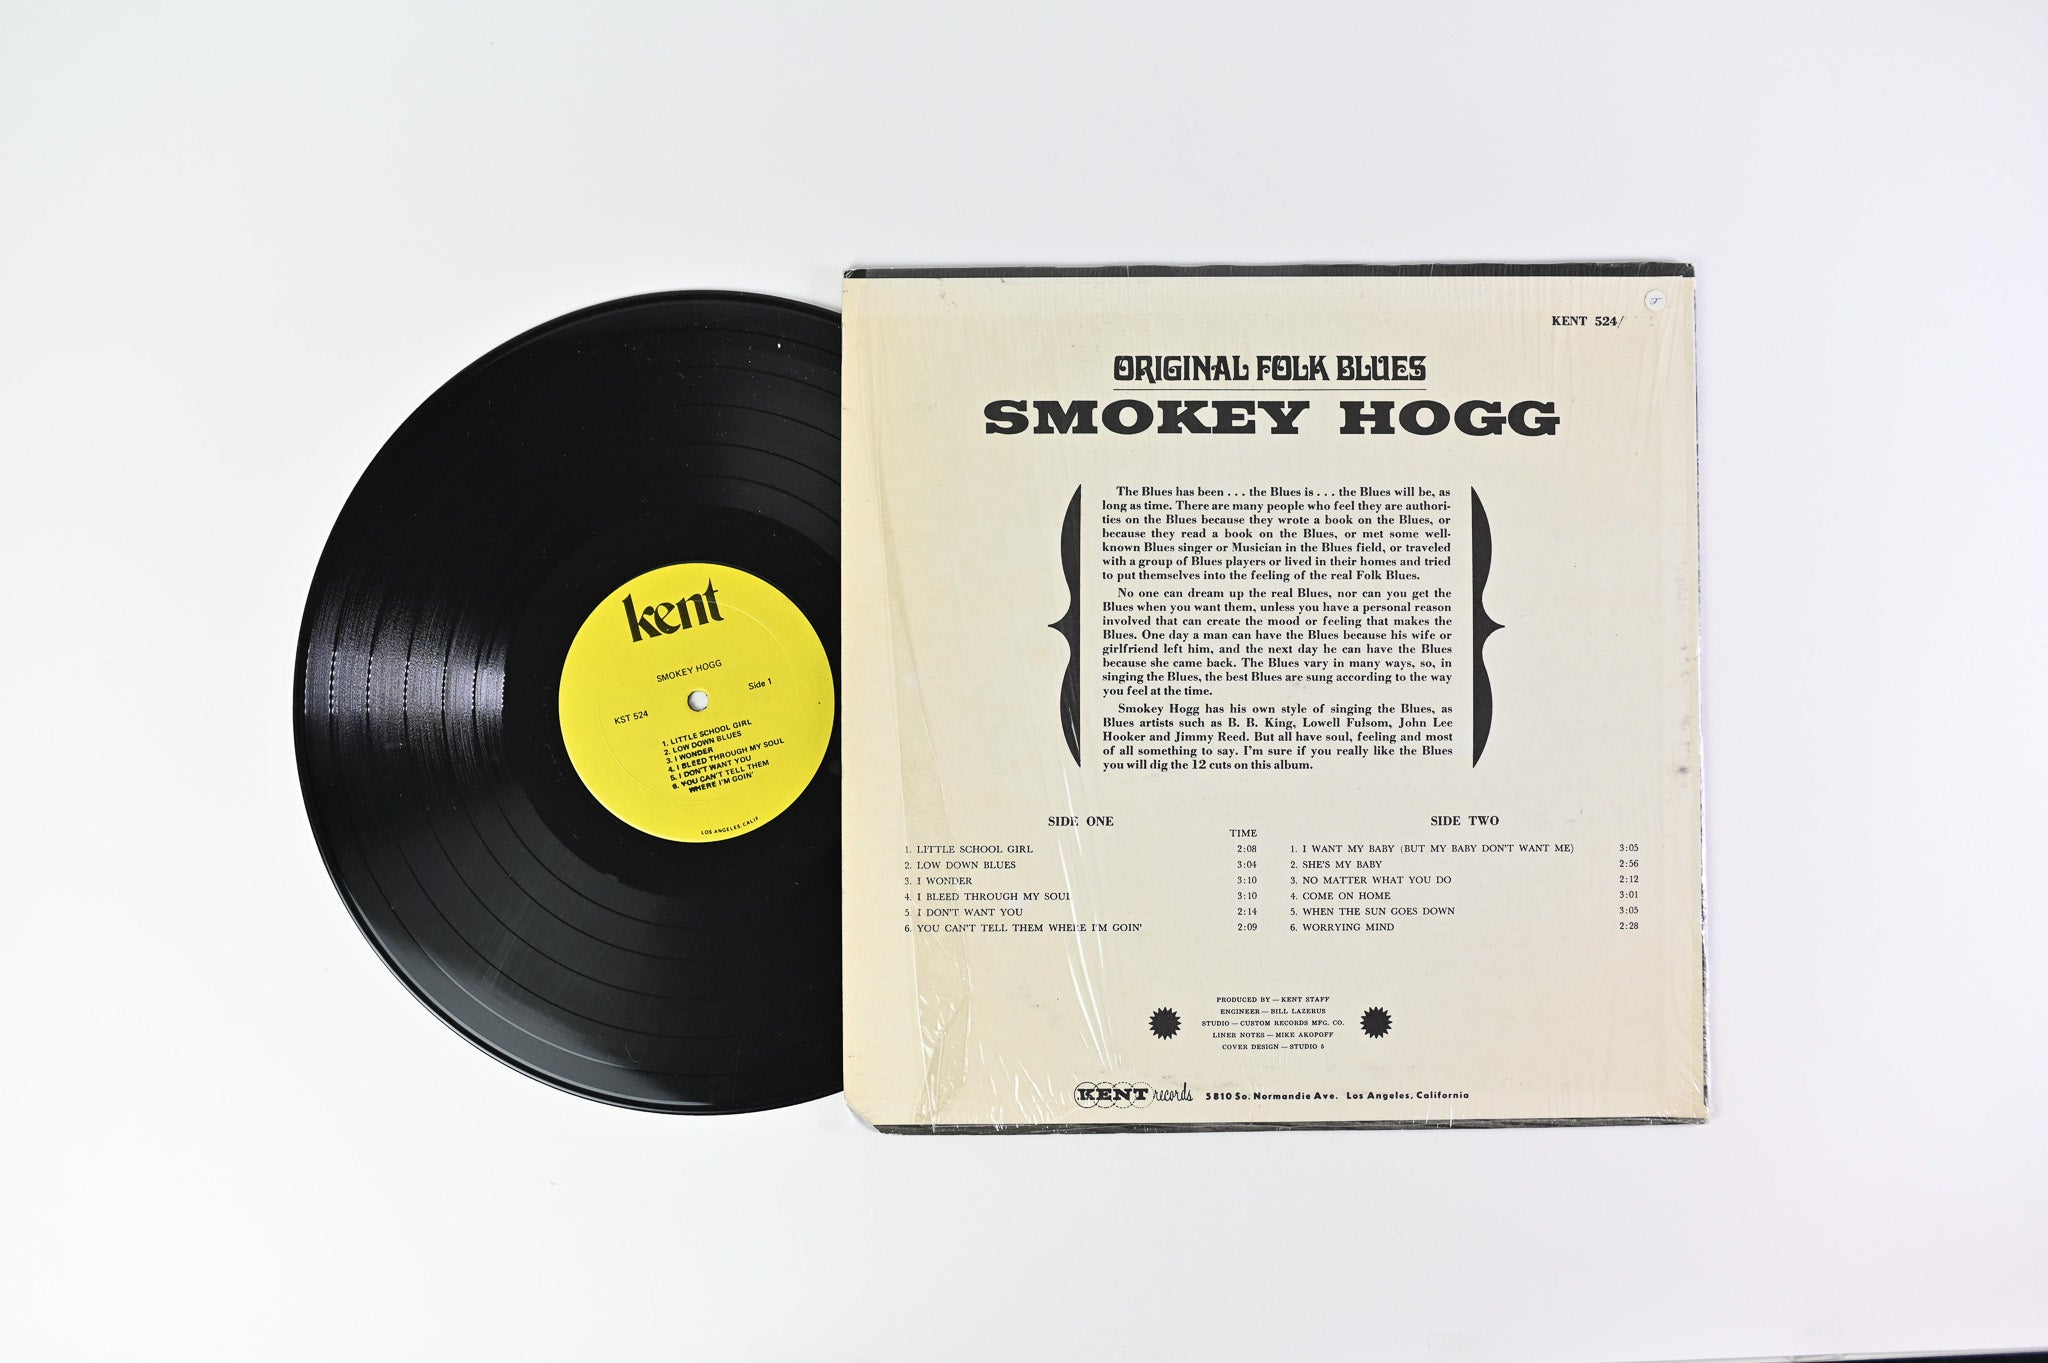 Smokey Hogg - Original Folk Blues on Kent